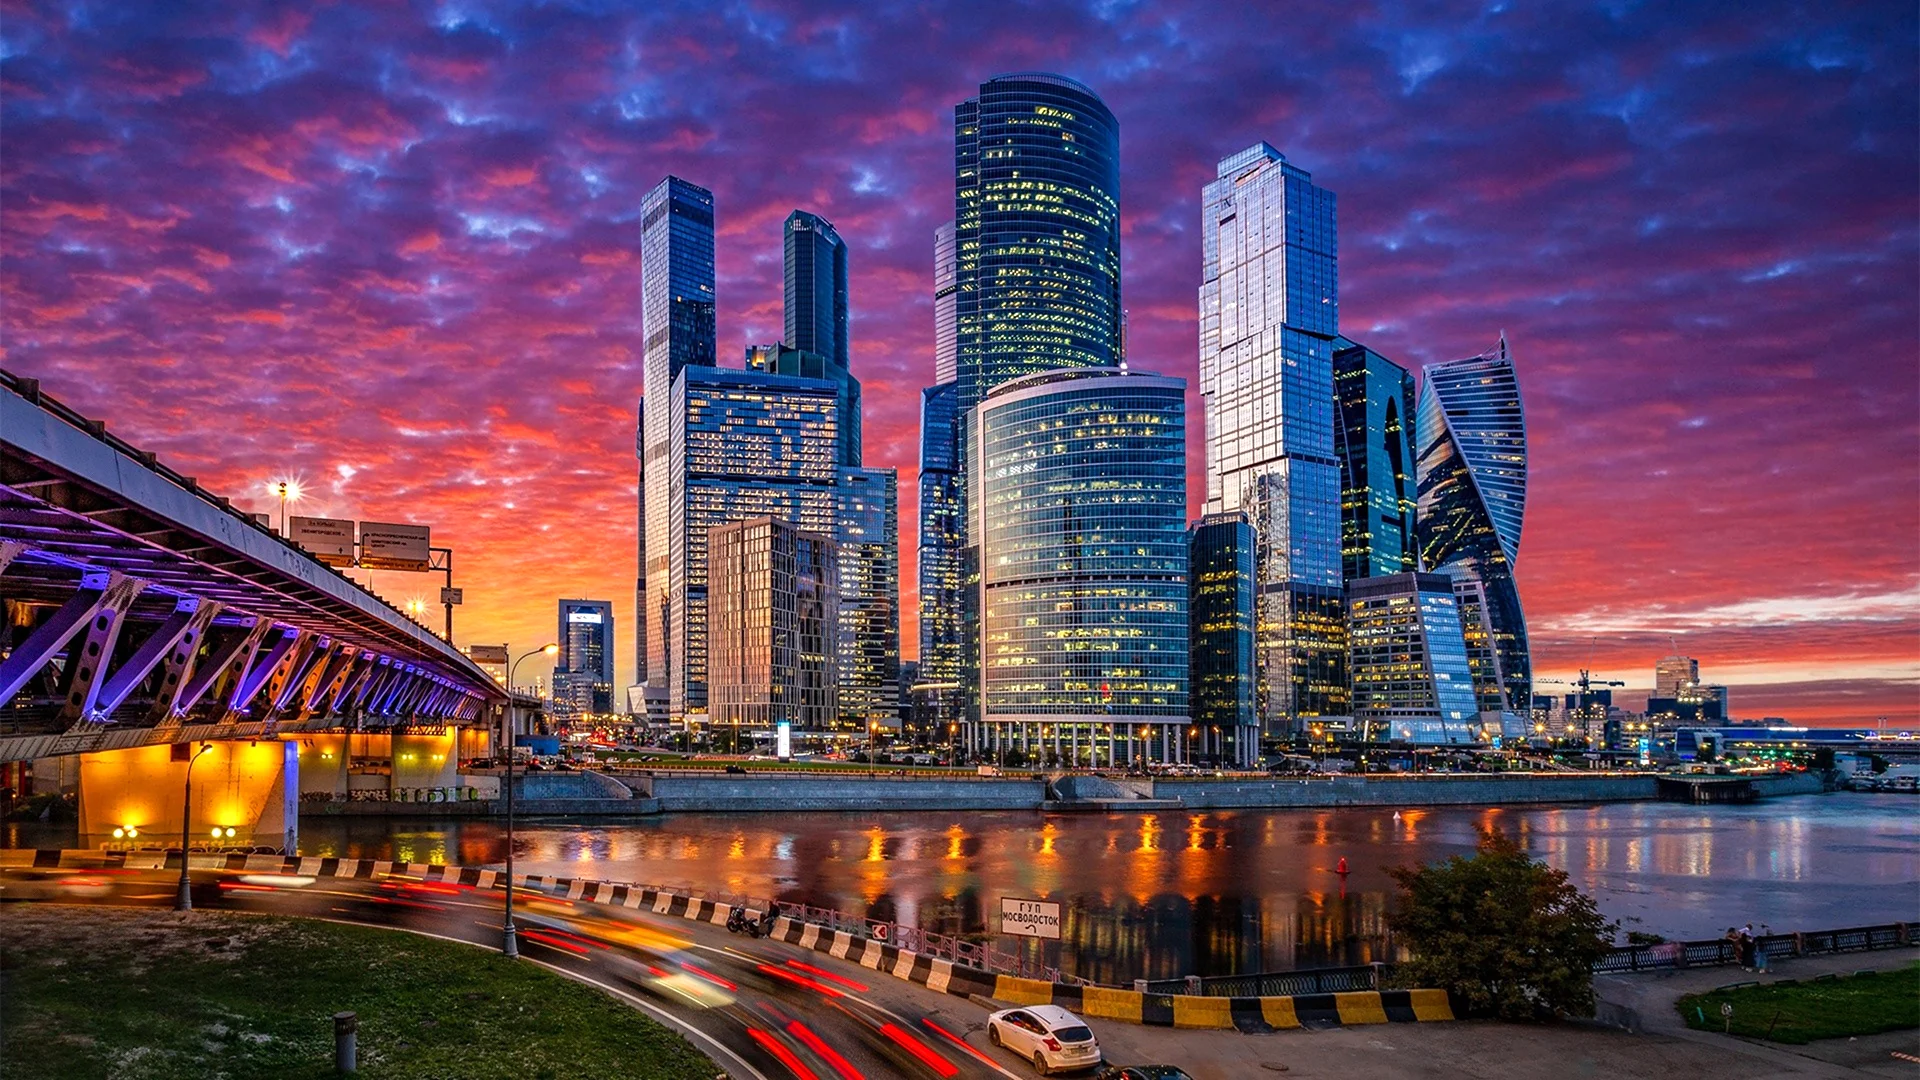 Москоу - Сити небоскребы река.